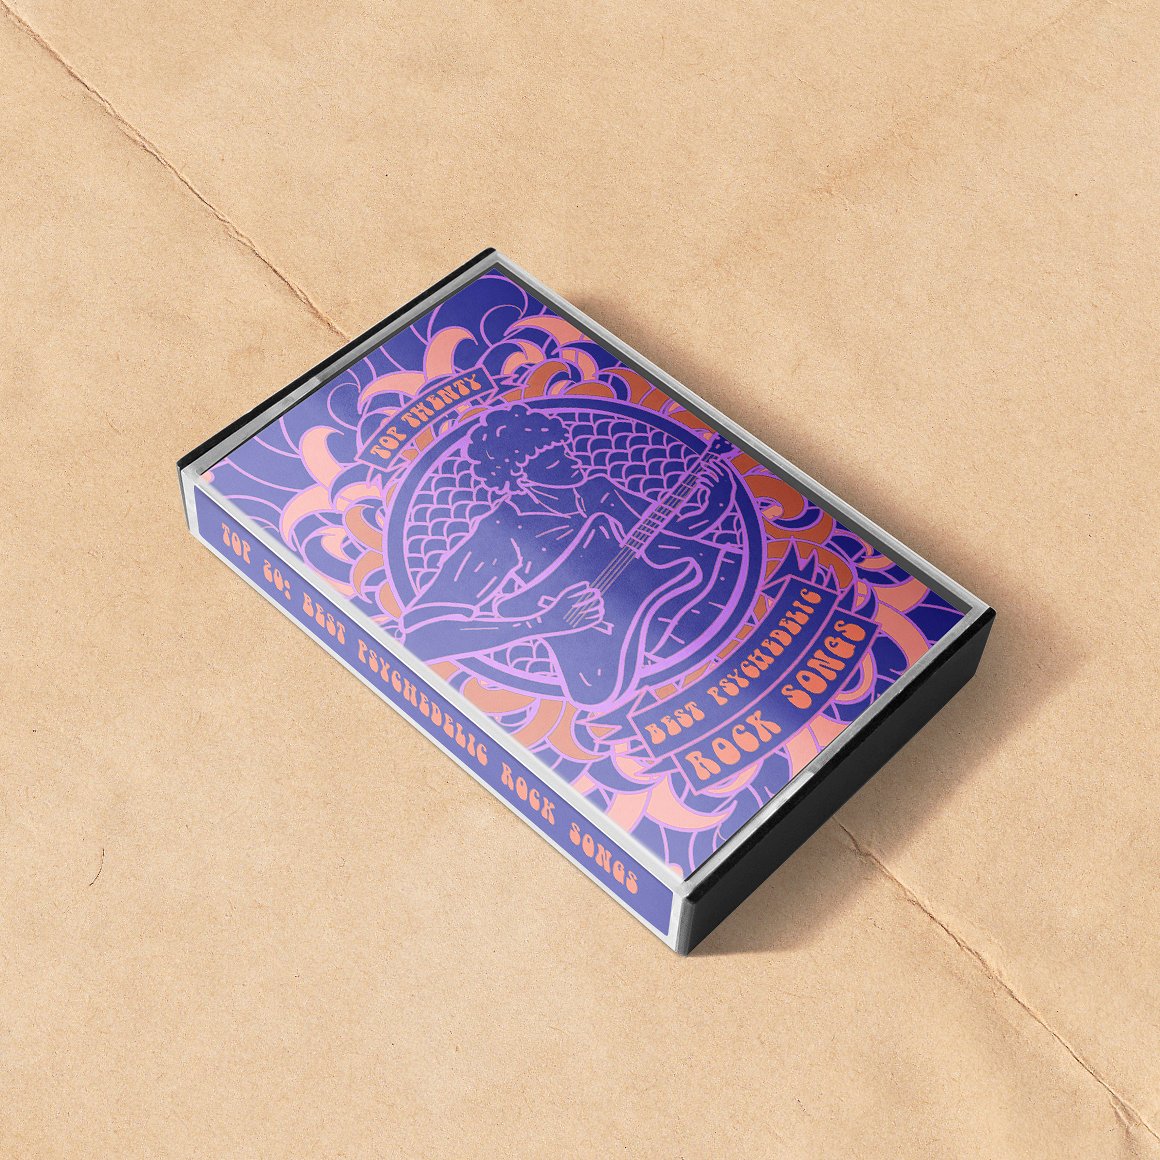 老式的盒式磁带样机 Old-Fashioned Cassette Tape Prototype插图4